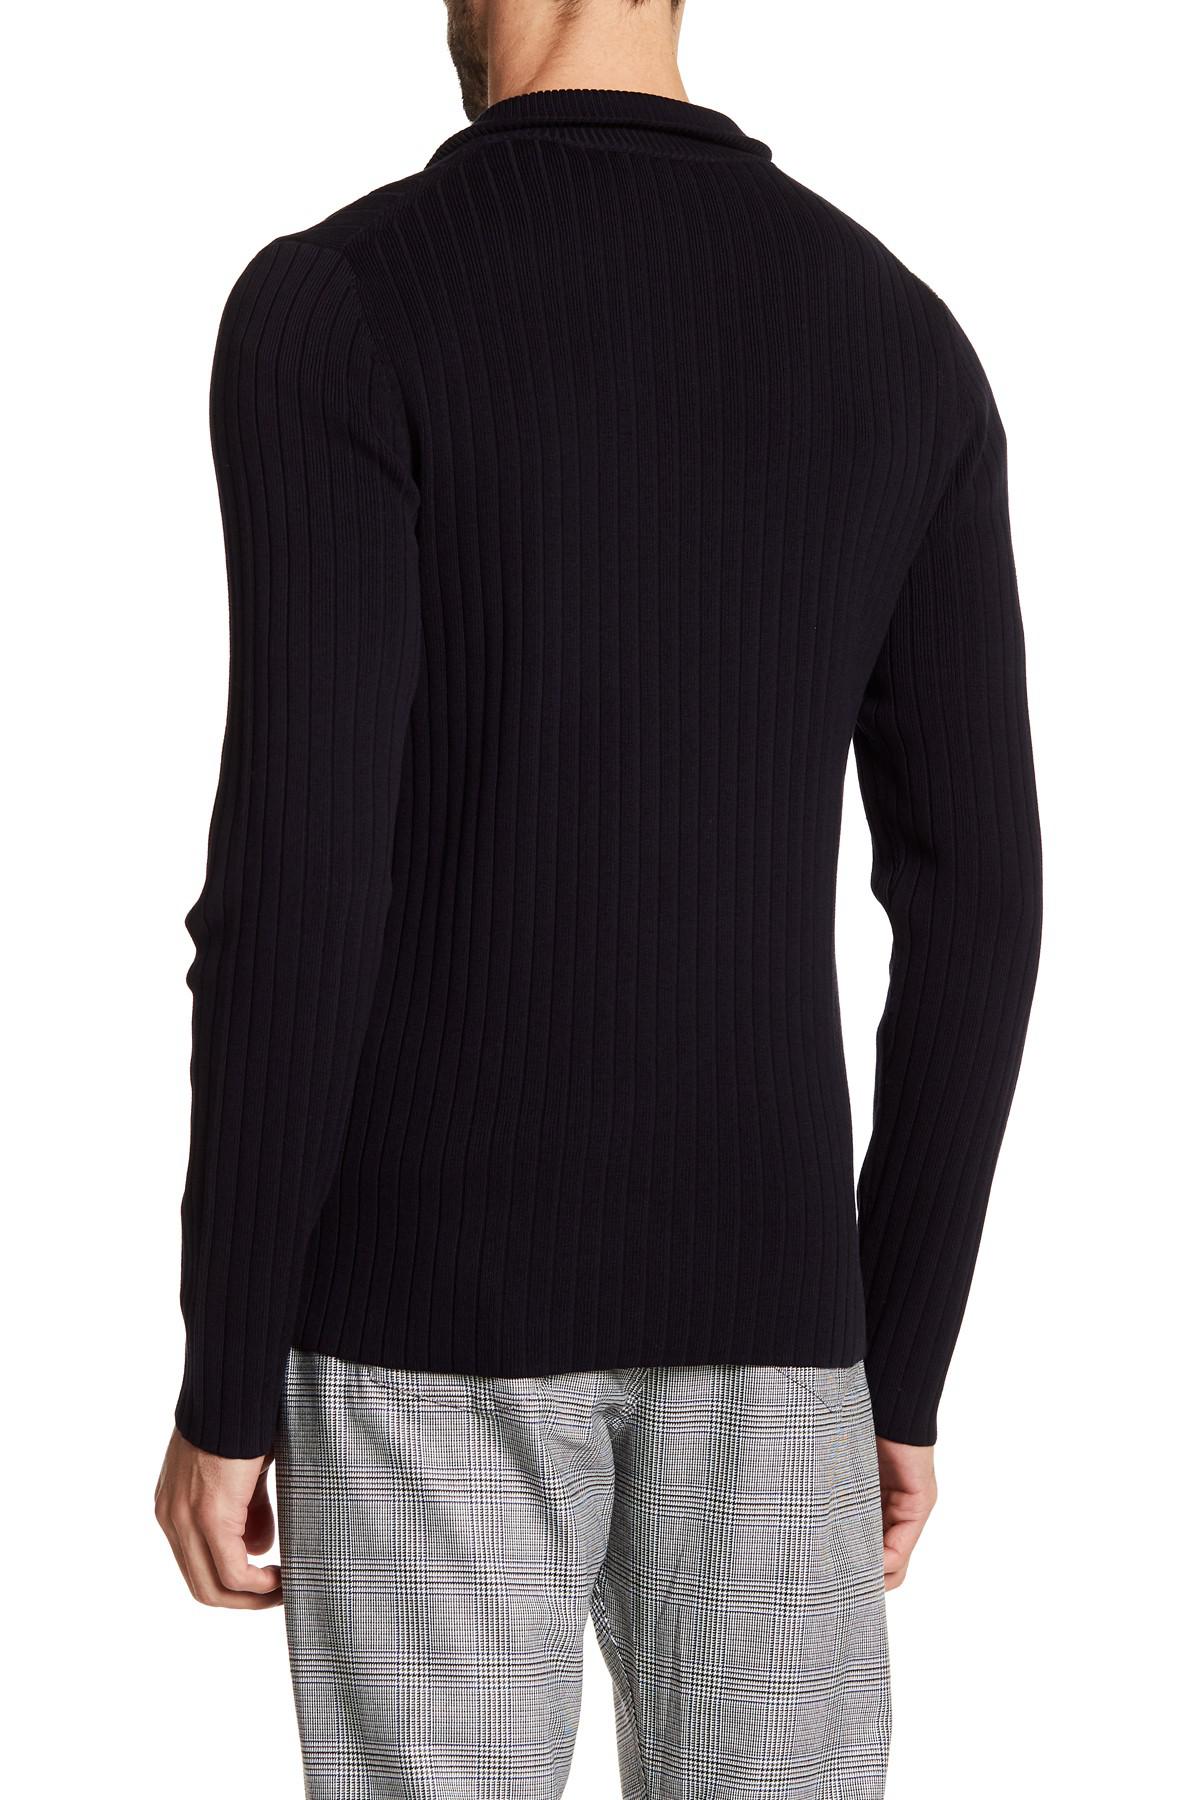 Vince Cotton Half-zip Mock Neck Ribbed Sweater in Black for Men - Lyst